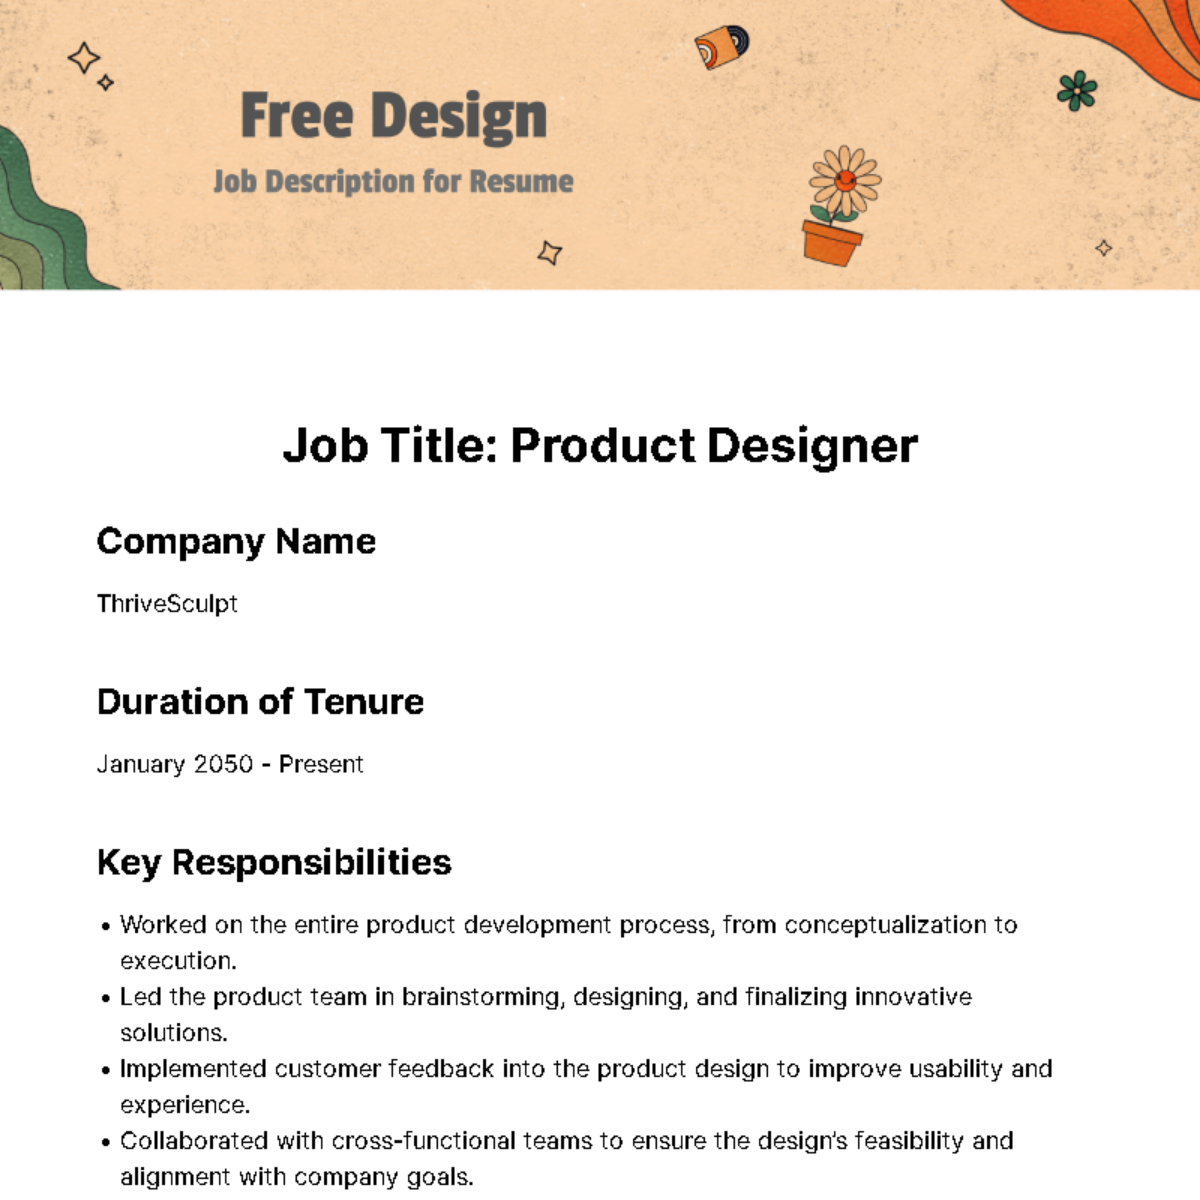 Design Job Description for Resume Template